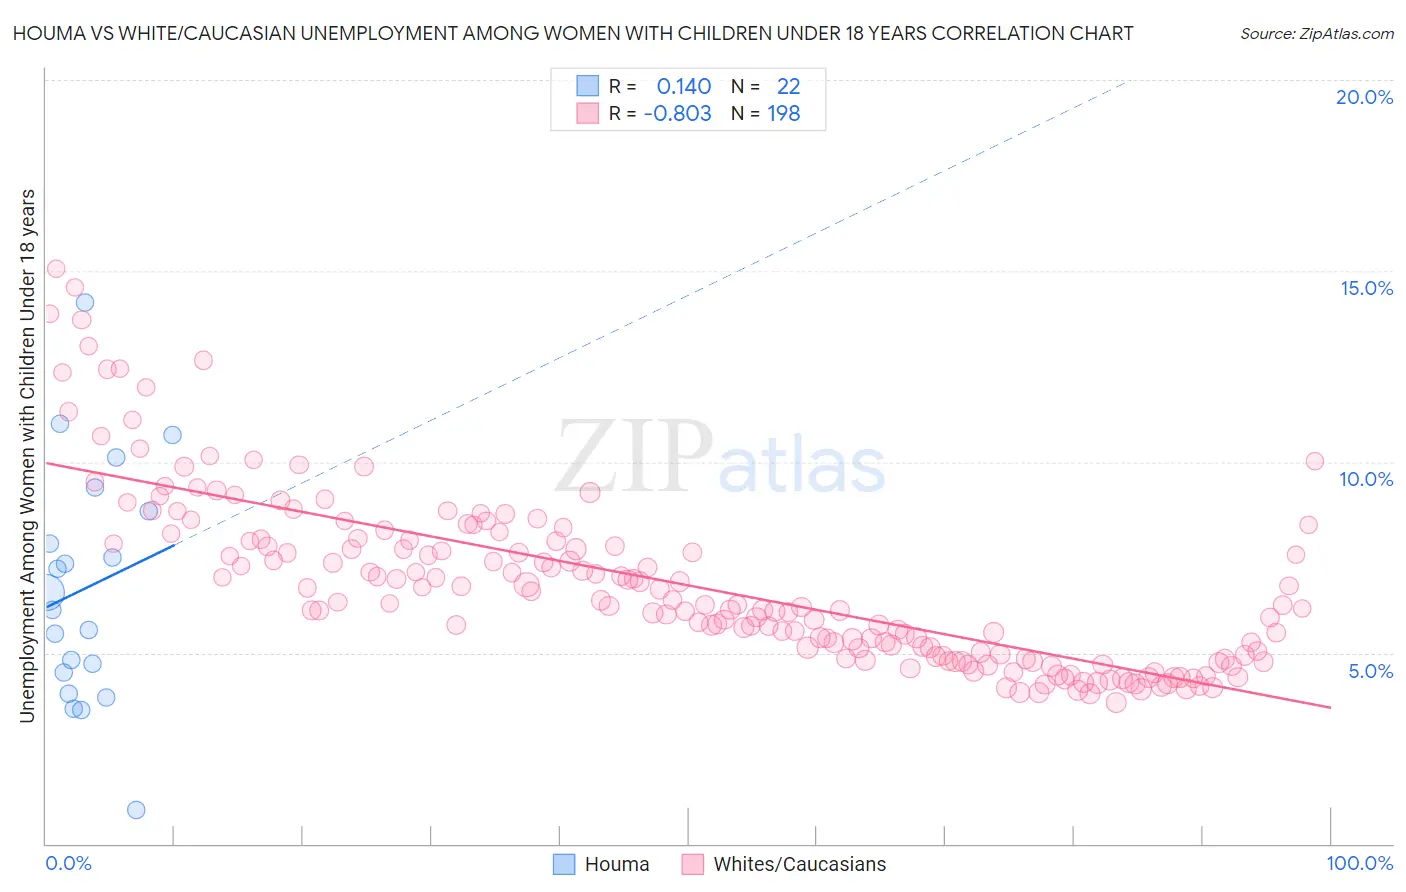 Houma vs White/Caucasian Unemployment Among Women with Children Under 18 years